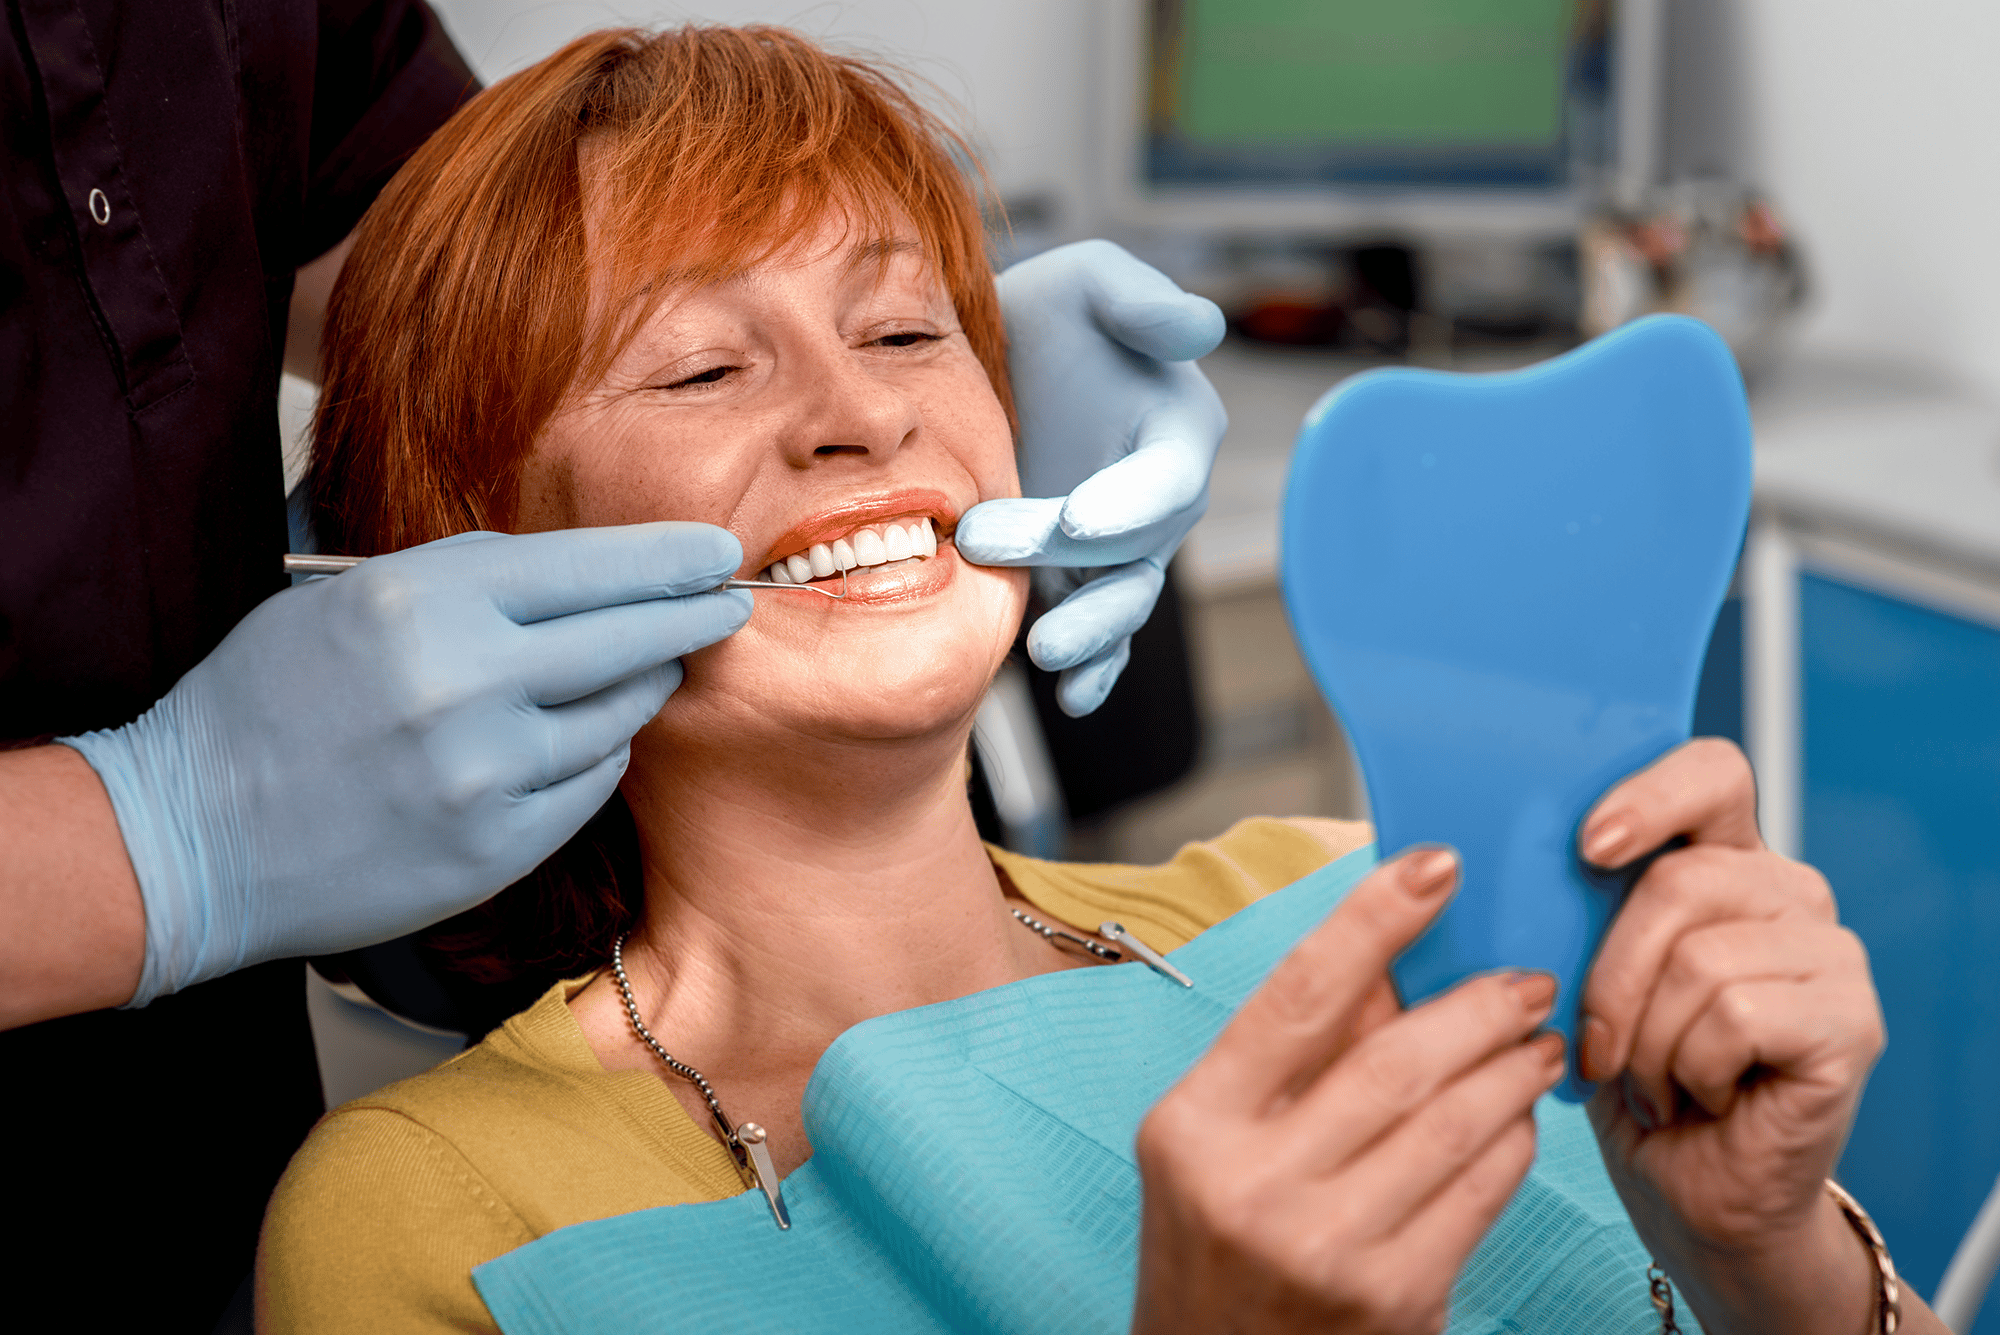 Dentures vs. Dental Implants